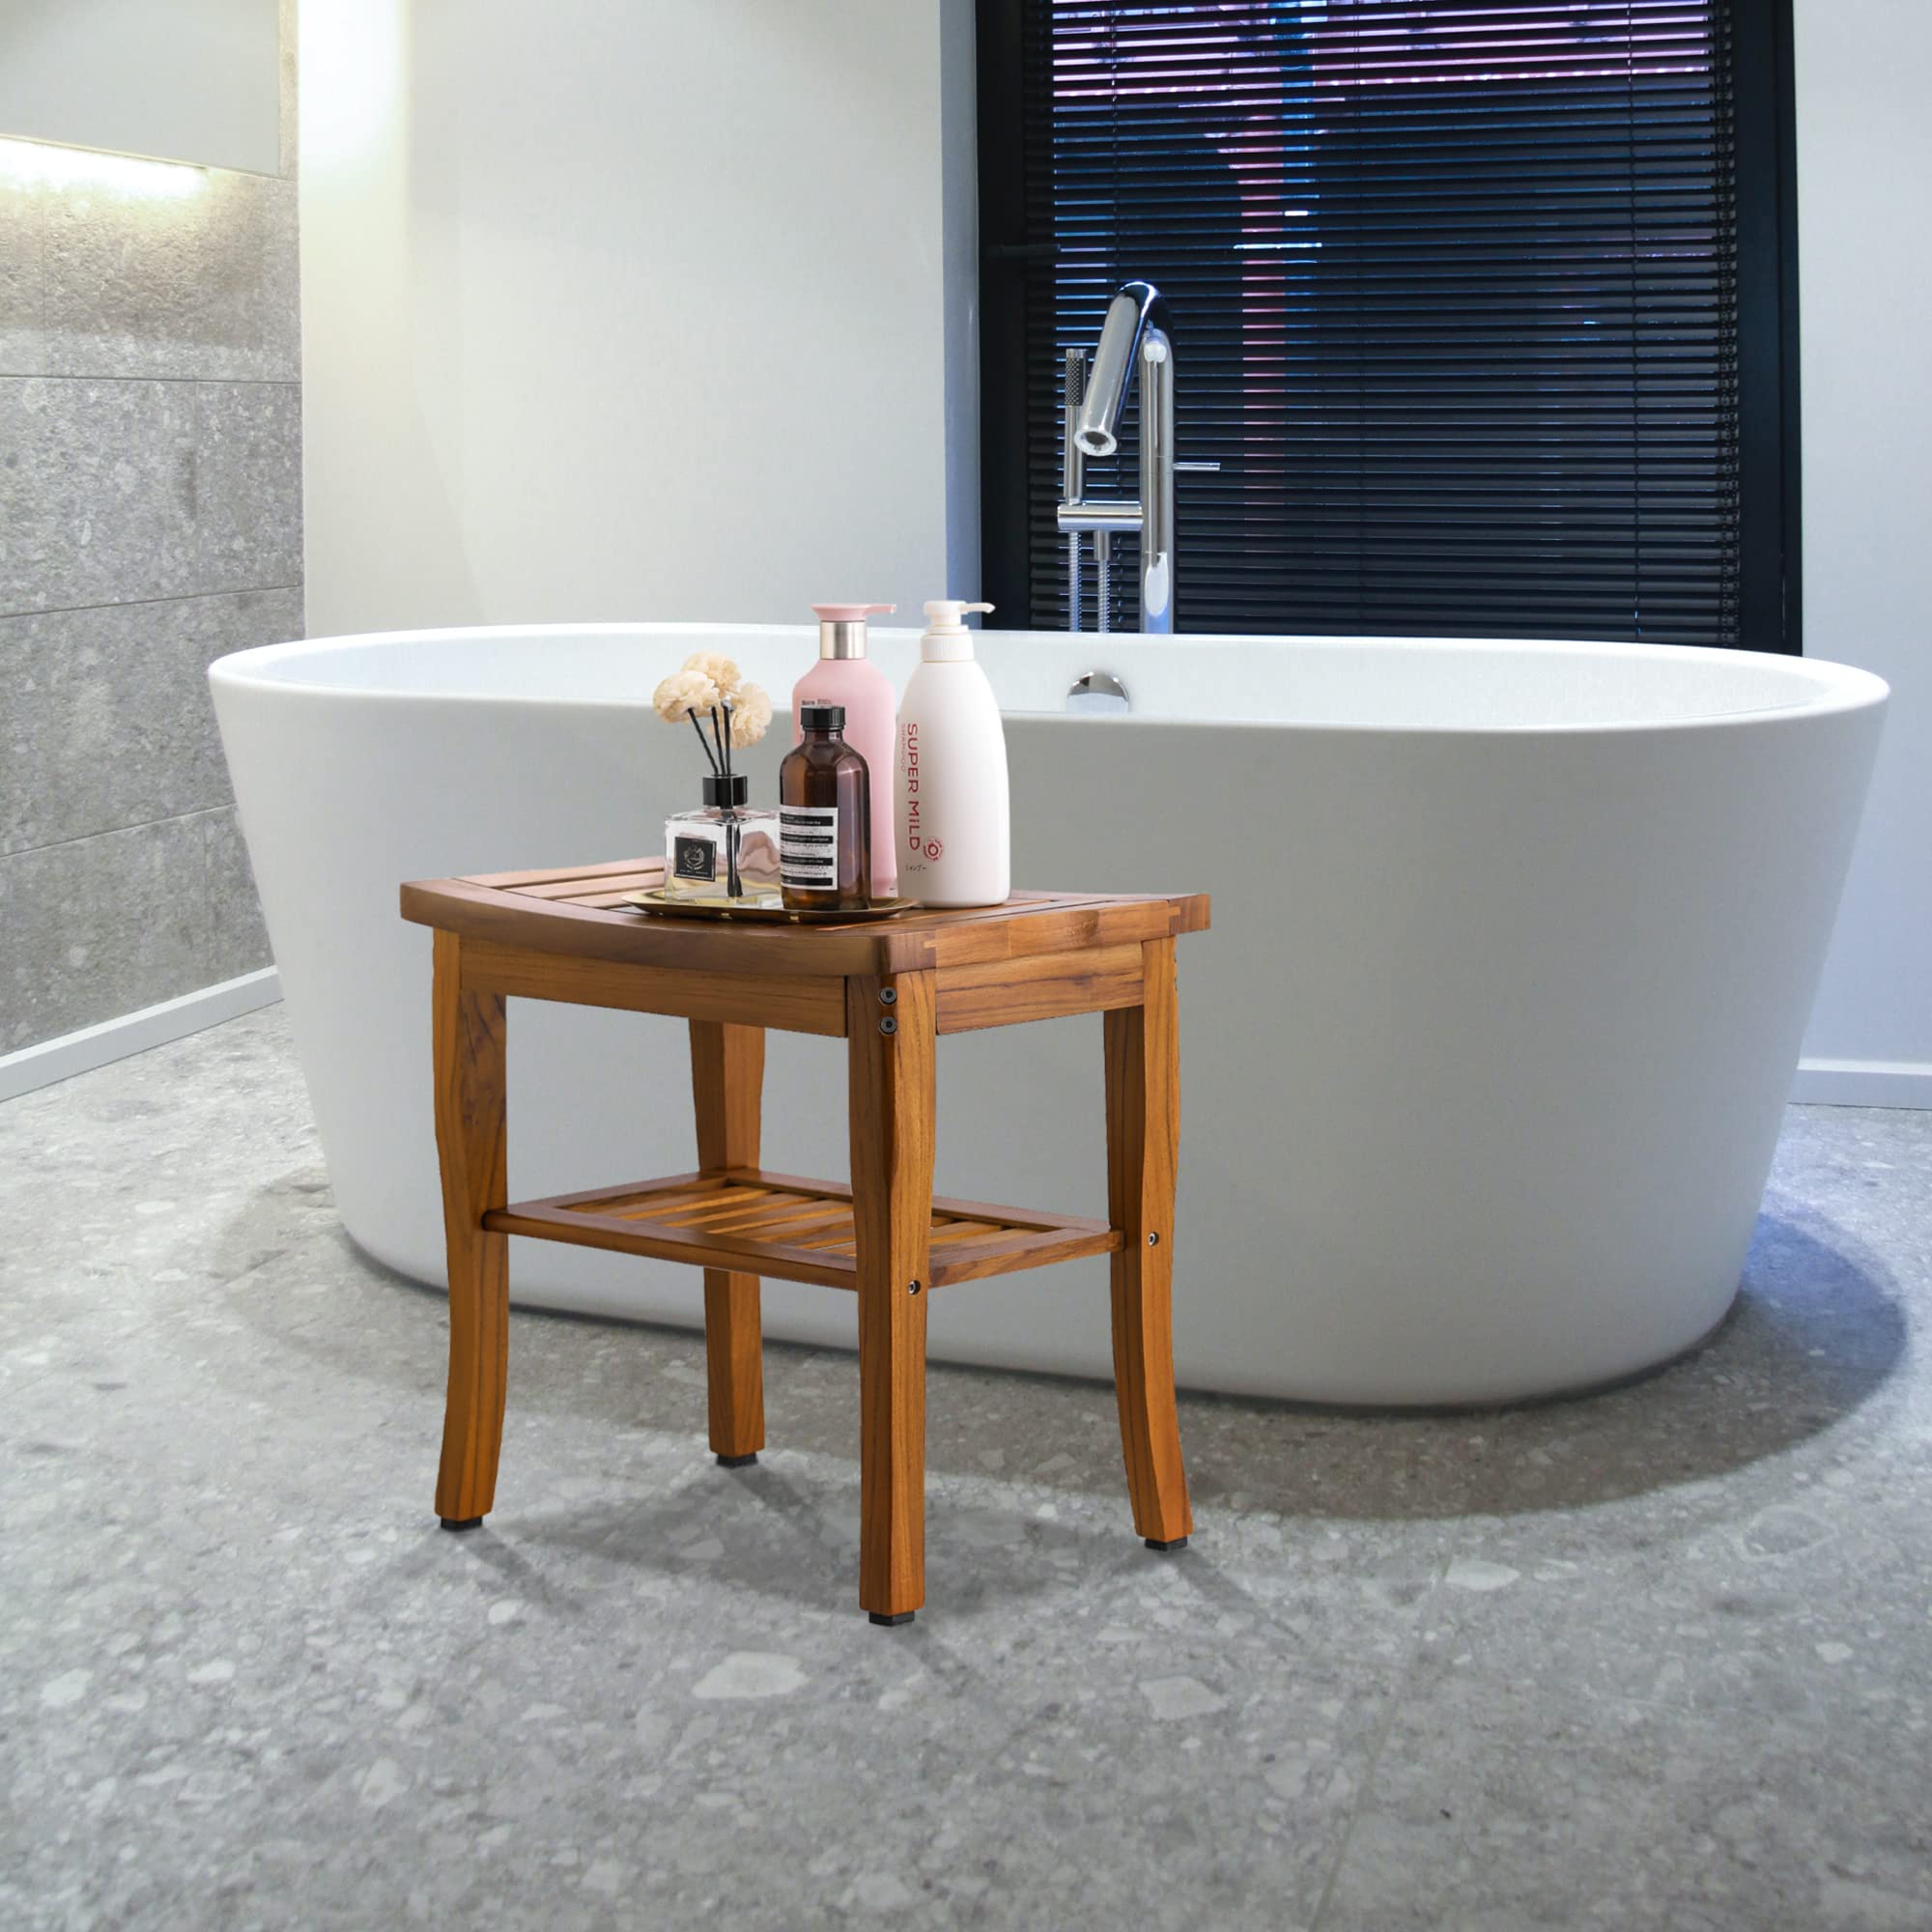 VaeFae Teak Shower Bench, Spa Bath Shower Stool with Storage Shelf, Wooden Seat Stool for Bathroom